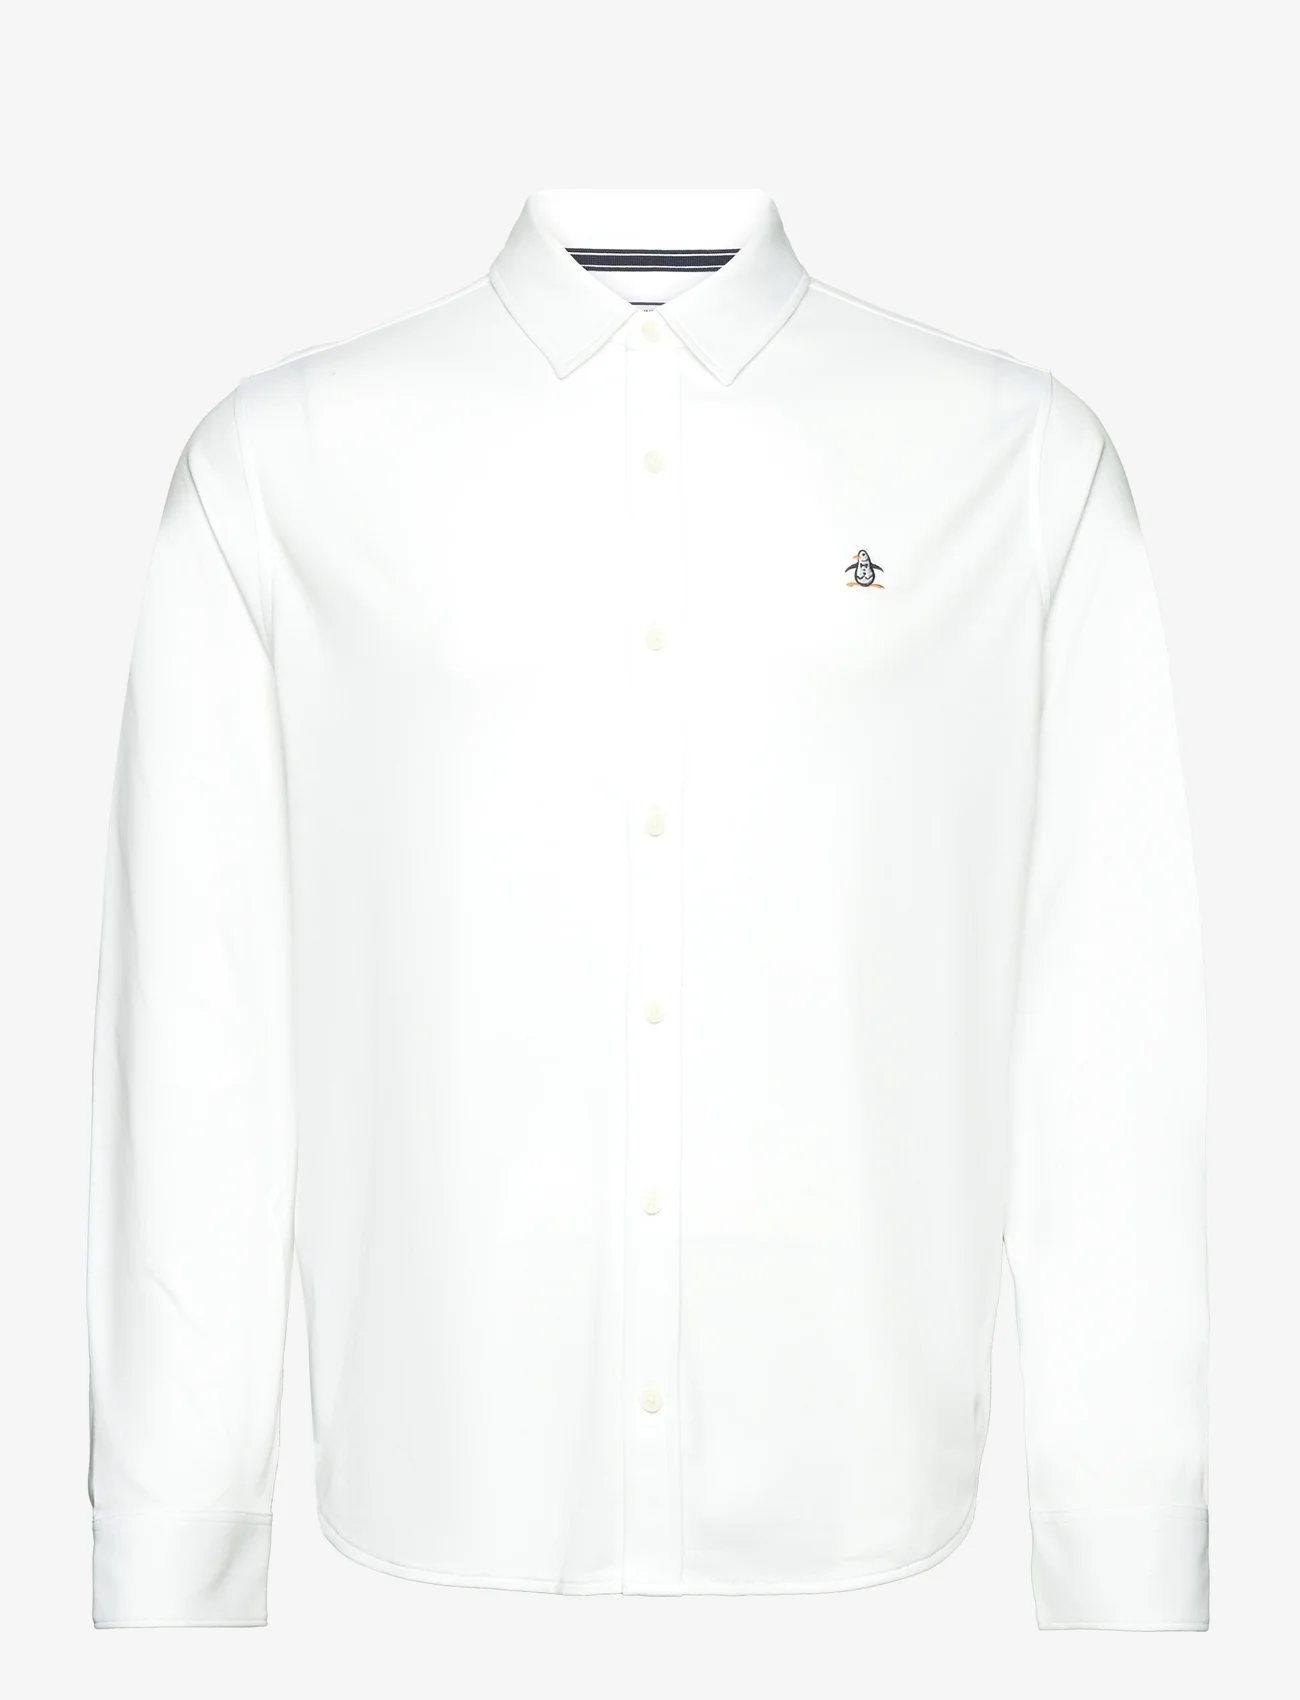 Original Penguin - LS BUTTON FRONT SHIR - basic shirts - bright white - 0